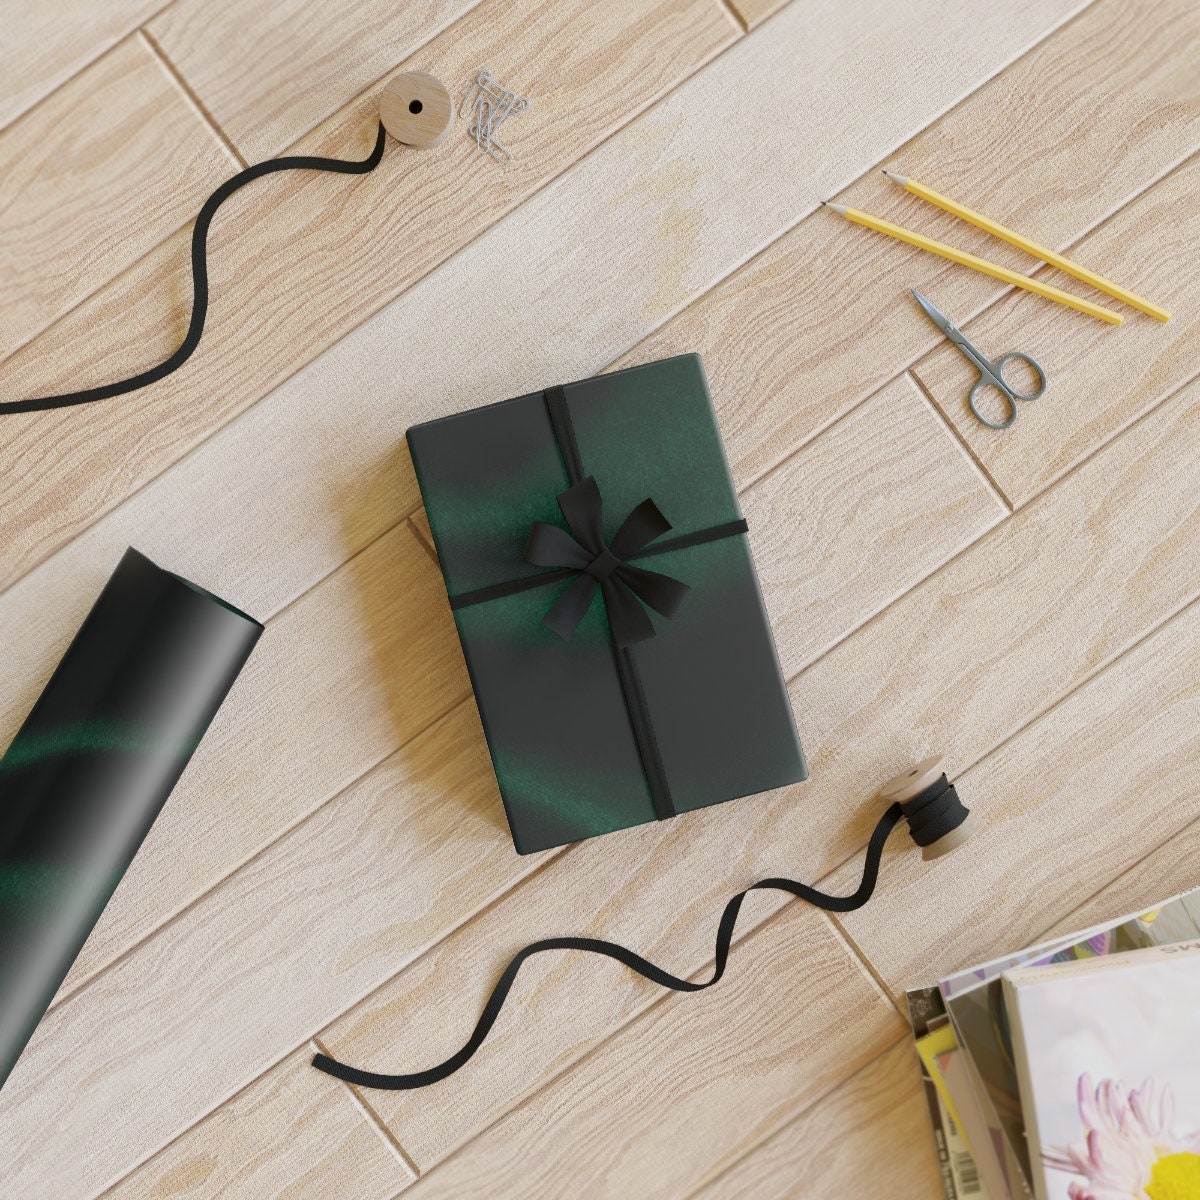 Matte Hunter Green Gift Wrap | Present Paper, Full Ream 833 ft x 24 in